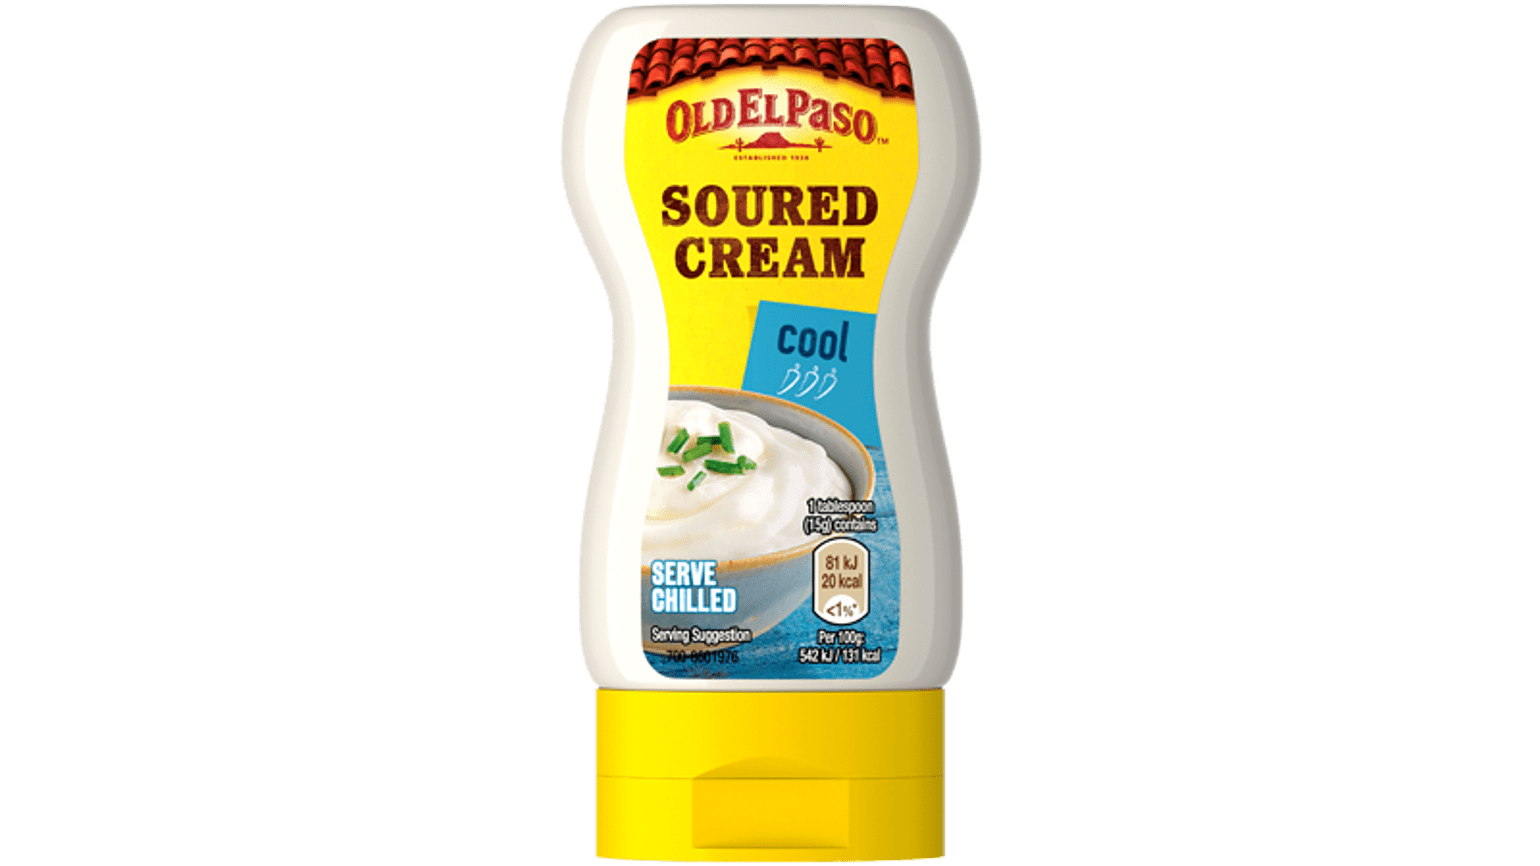 Squeezy bottle of Old El Paso's soured cream